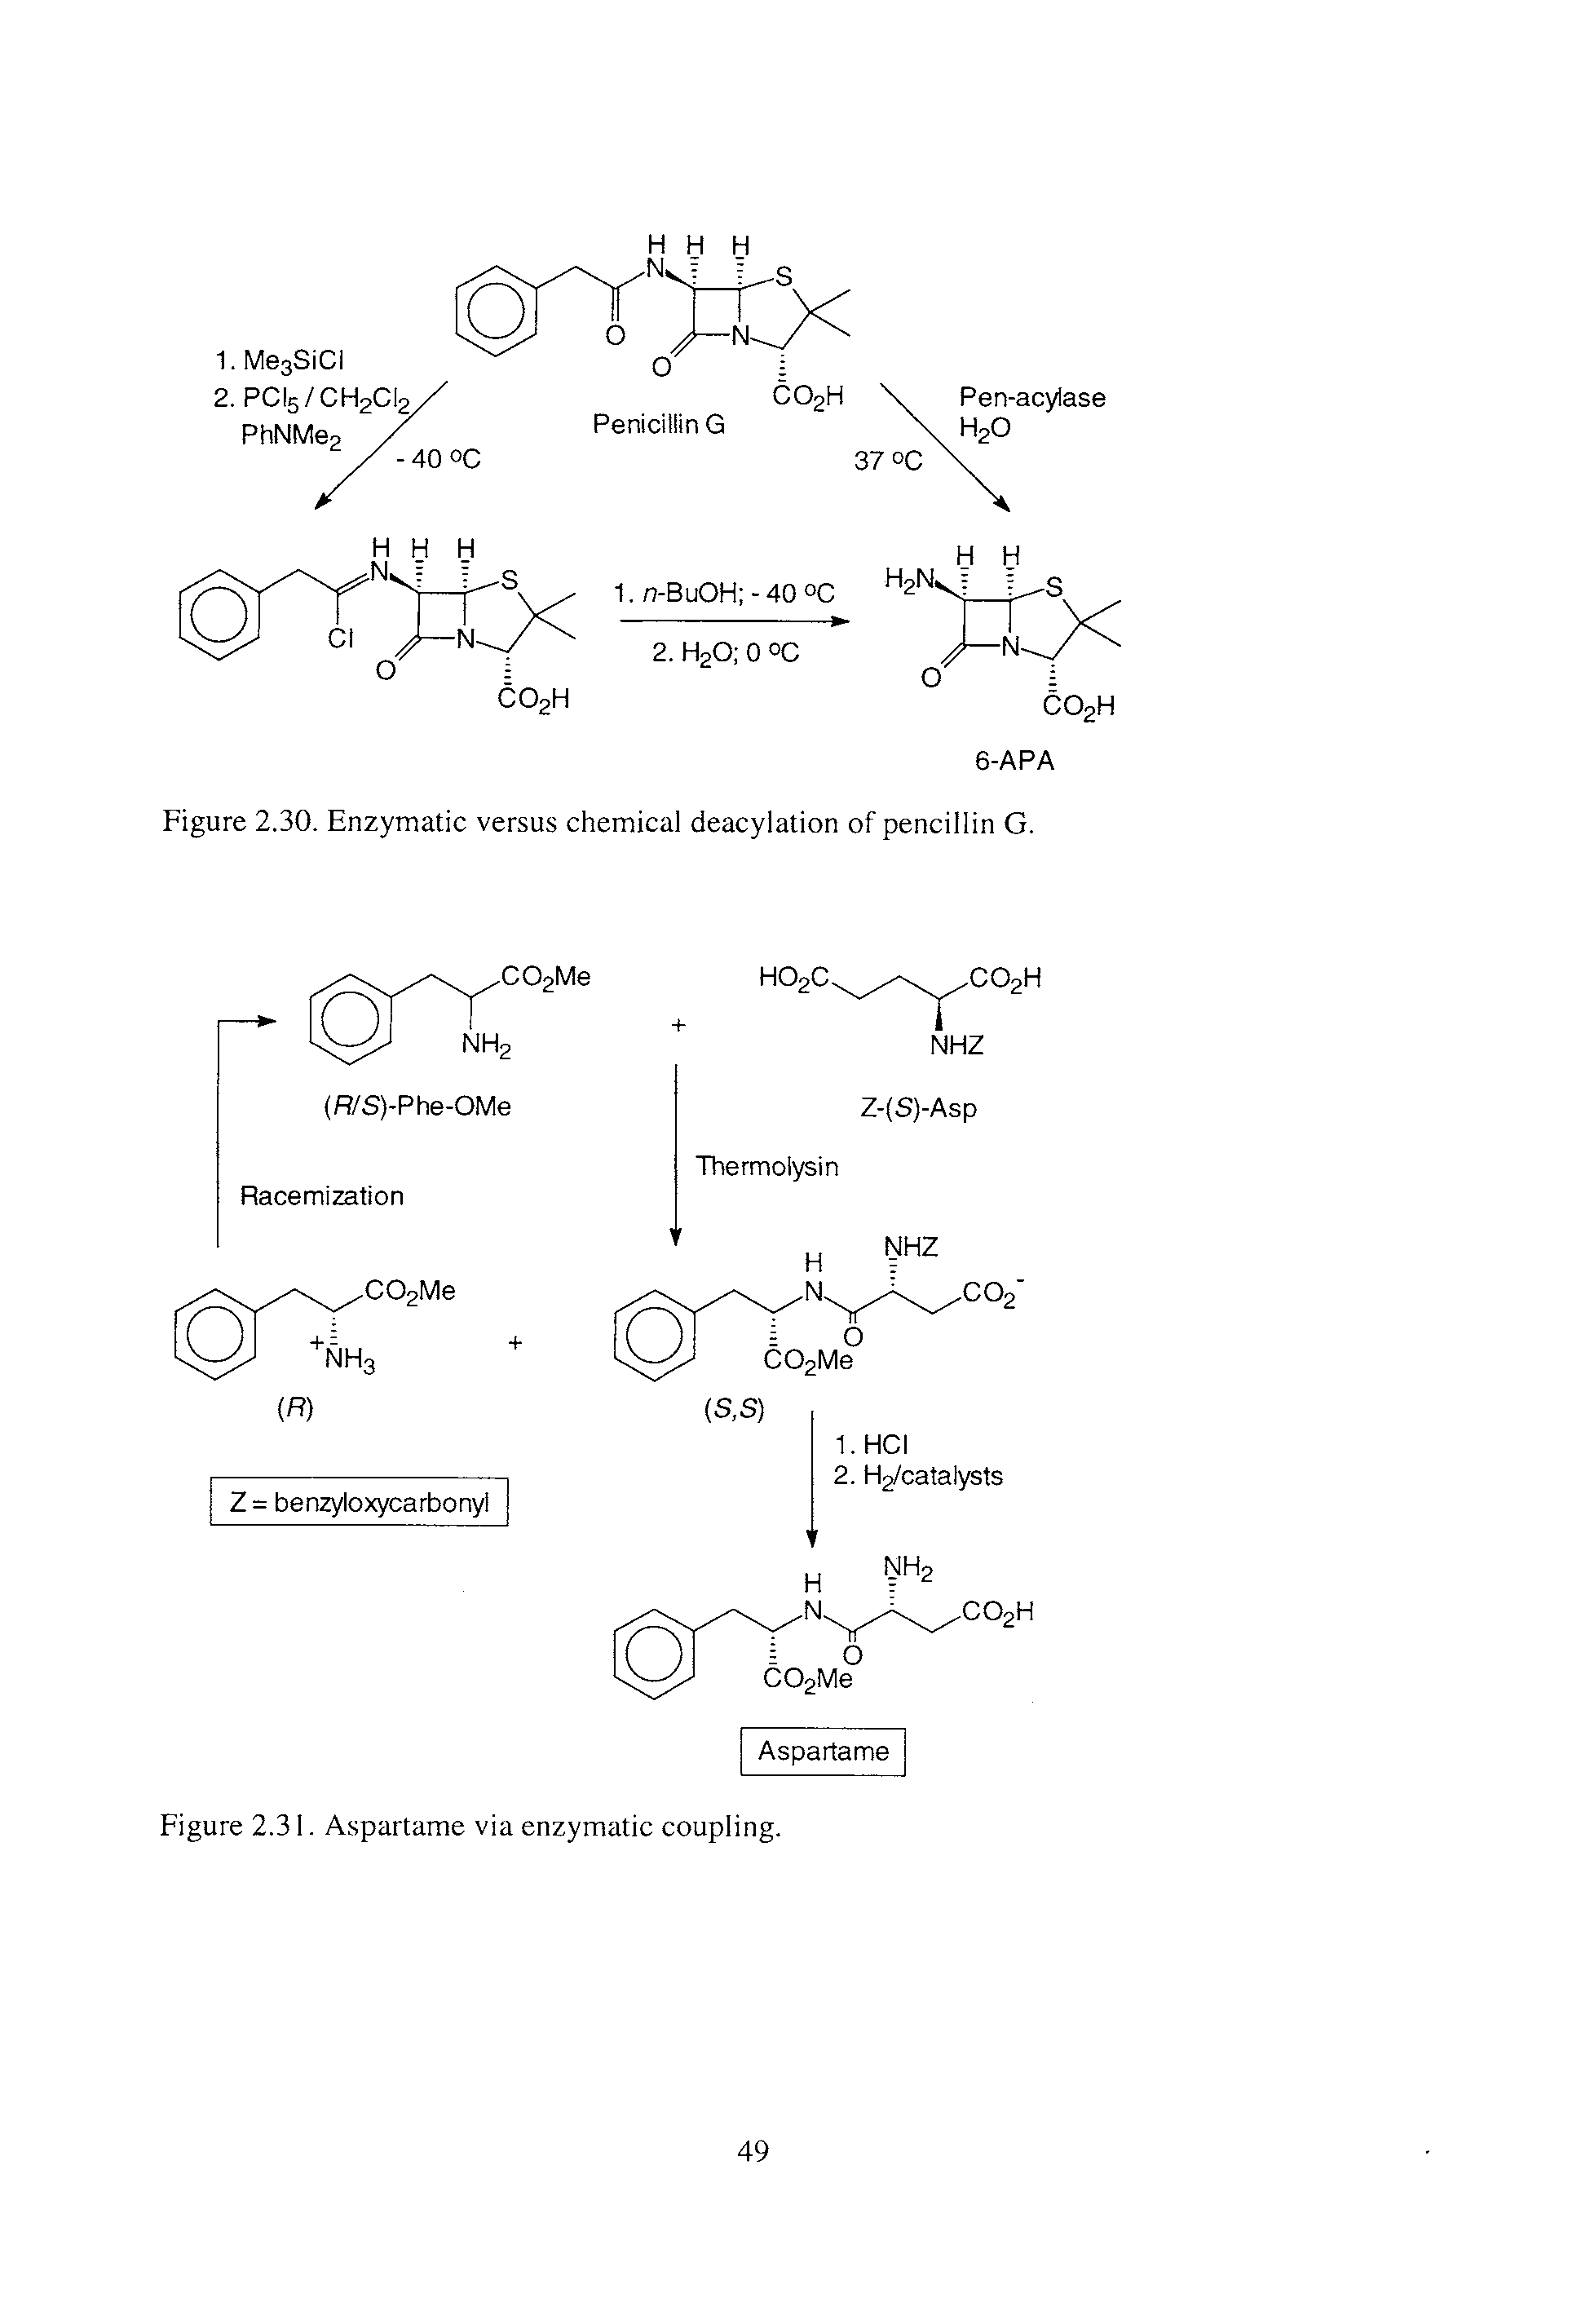 Figure 2.30. Enzymatic versus chemical deacylation of pencillin G.